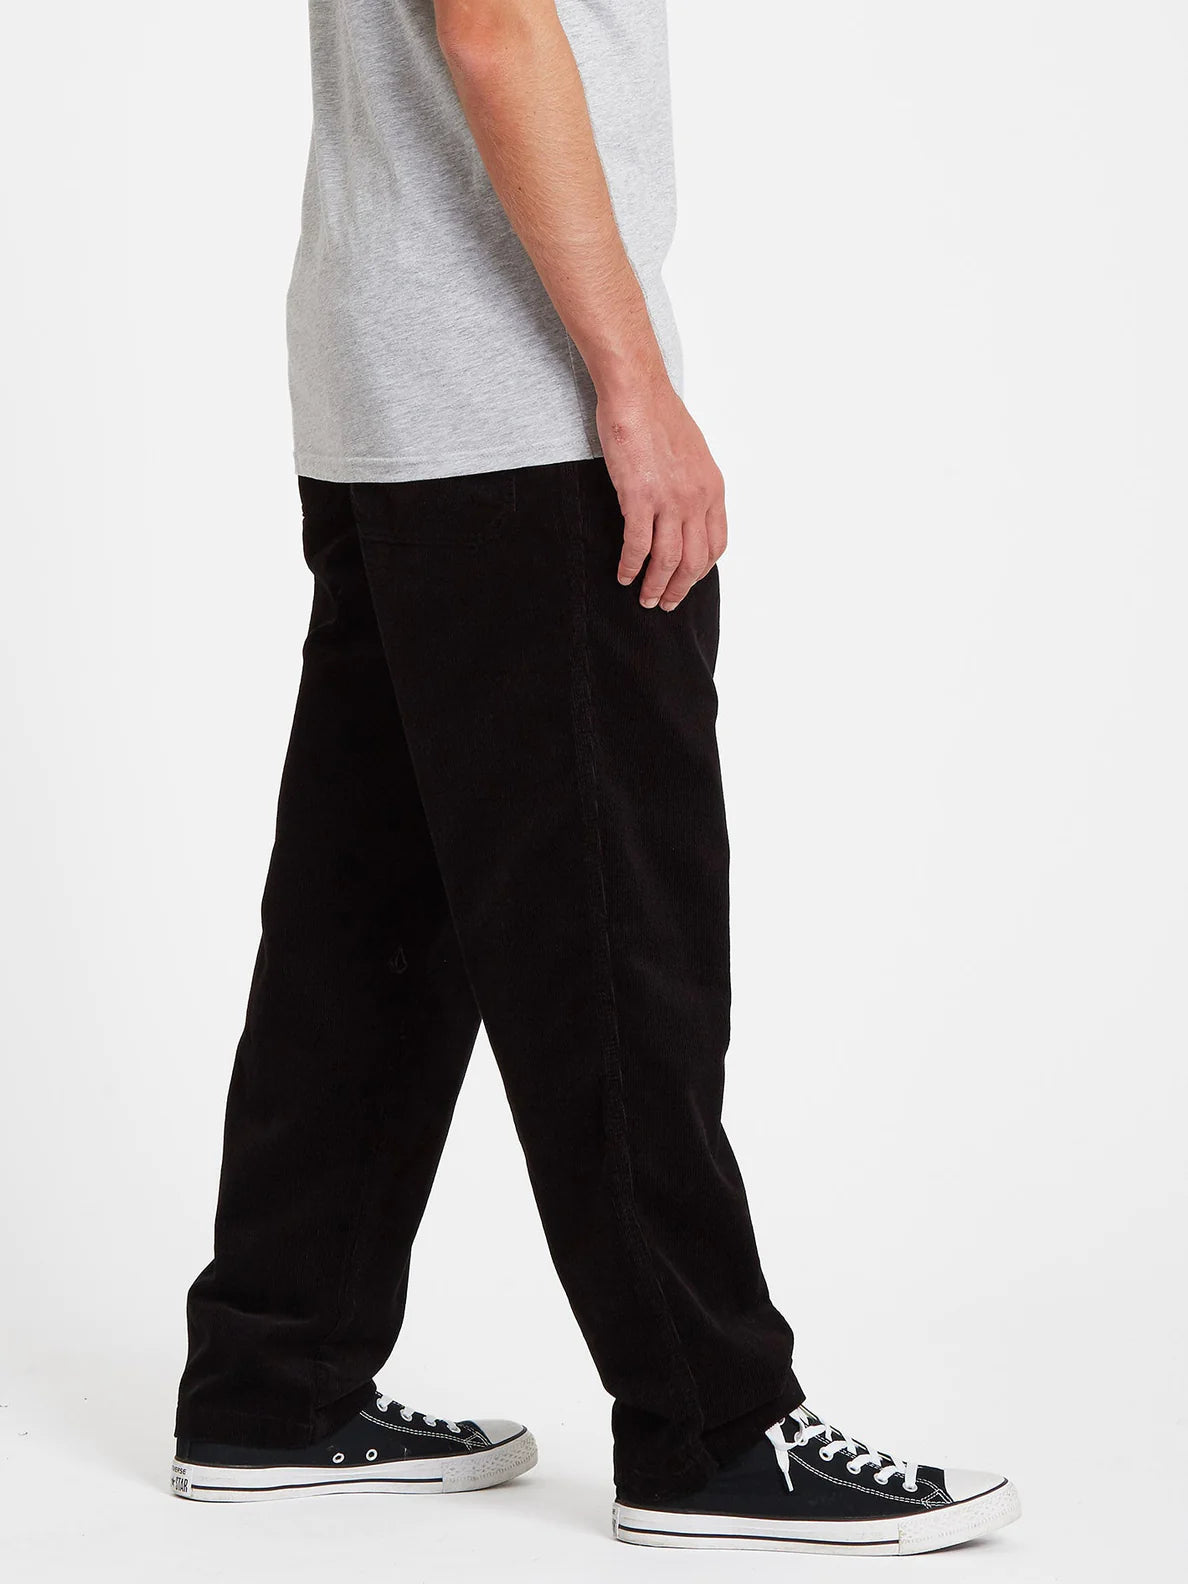 Pantalón Volcom Psychstone - Black | Pantalones Tejanos | Todos los pantalones de hombre | Volcom Shop | surfdevils.com